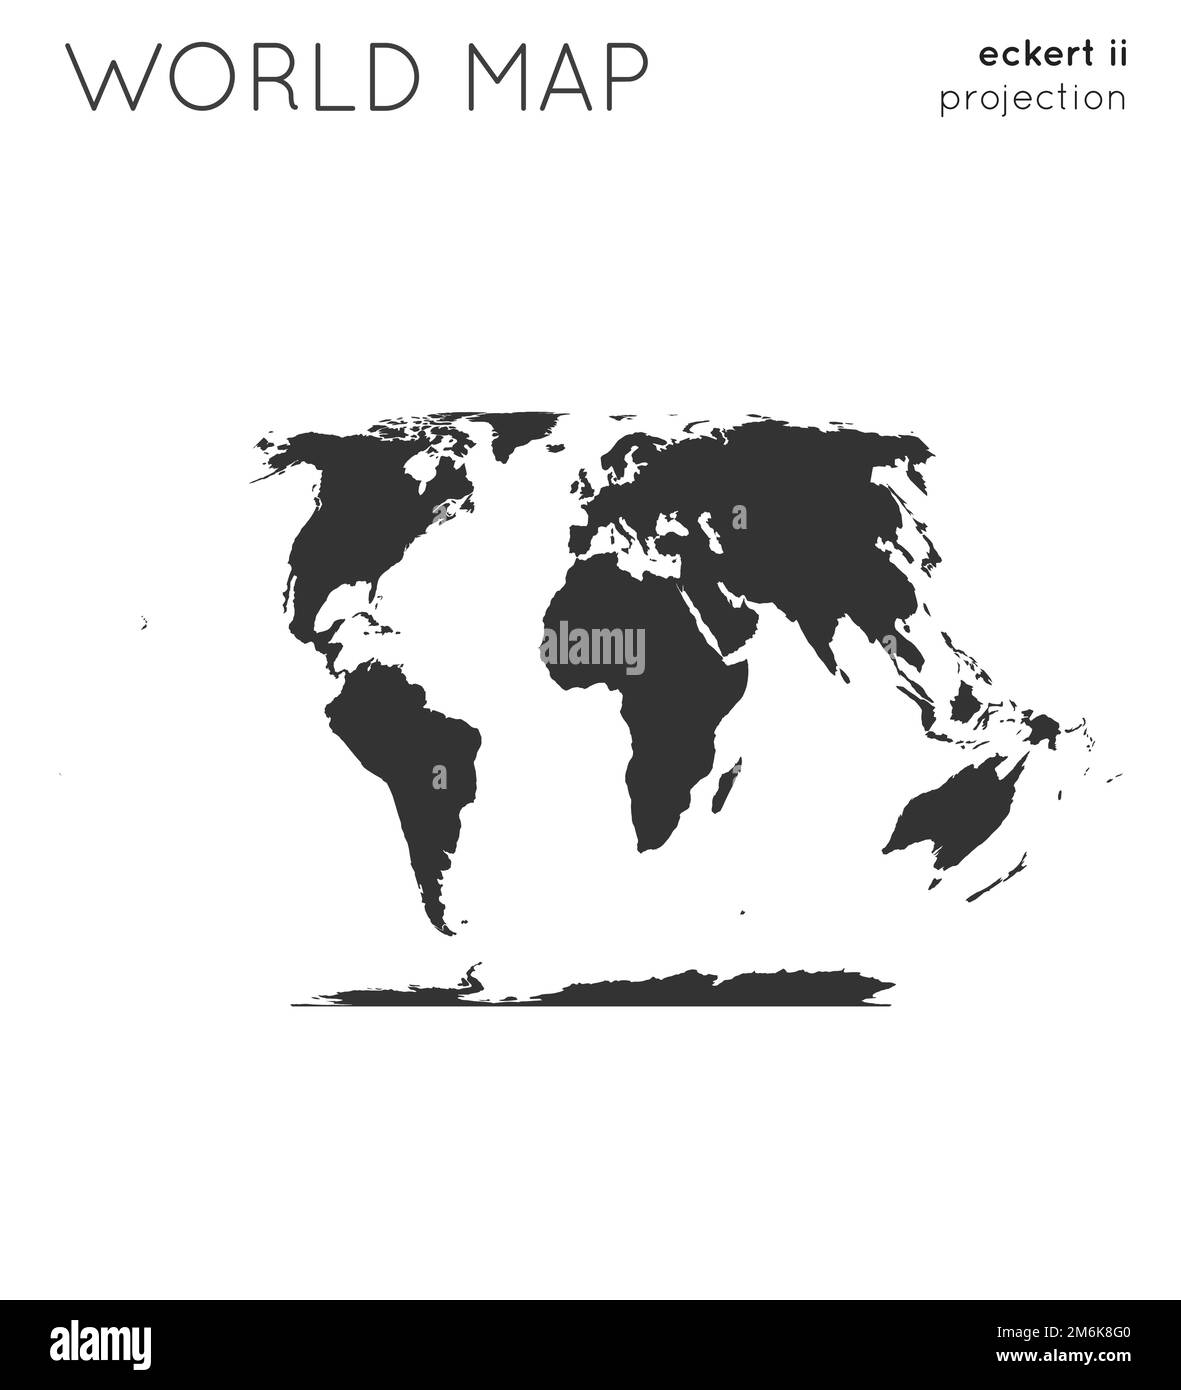 World map. Globe in eckert ii projection, plain style. Modern vector ...